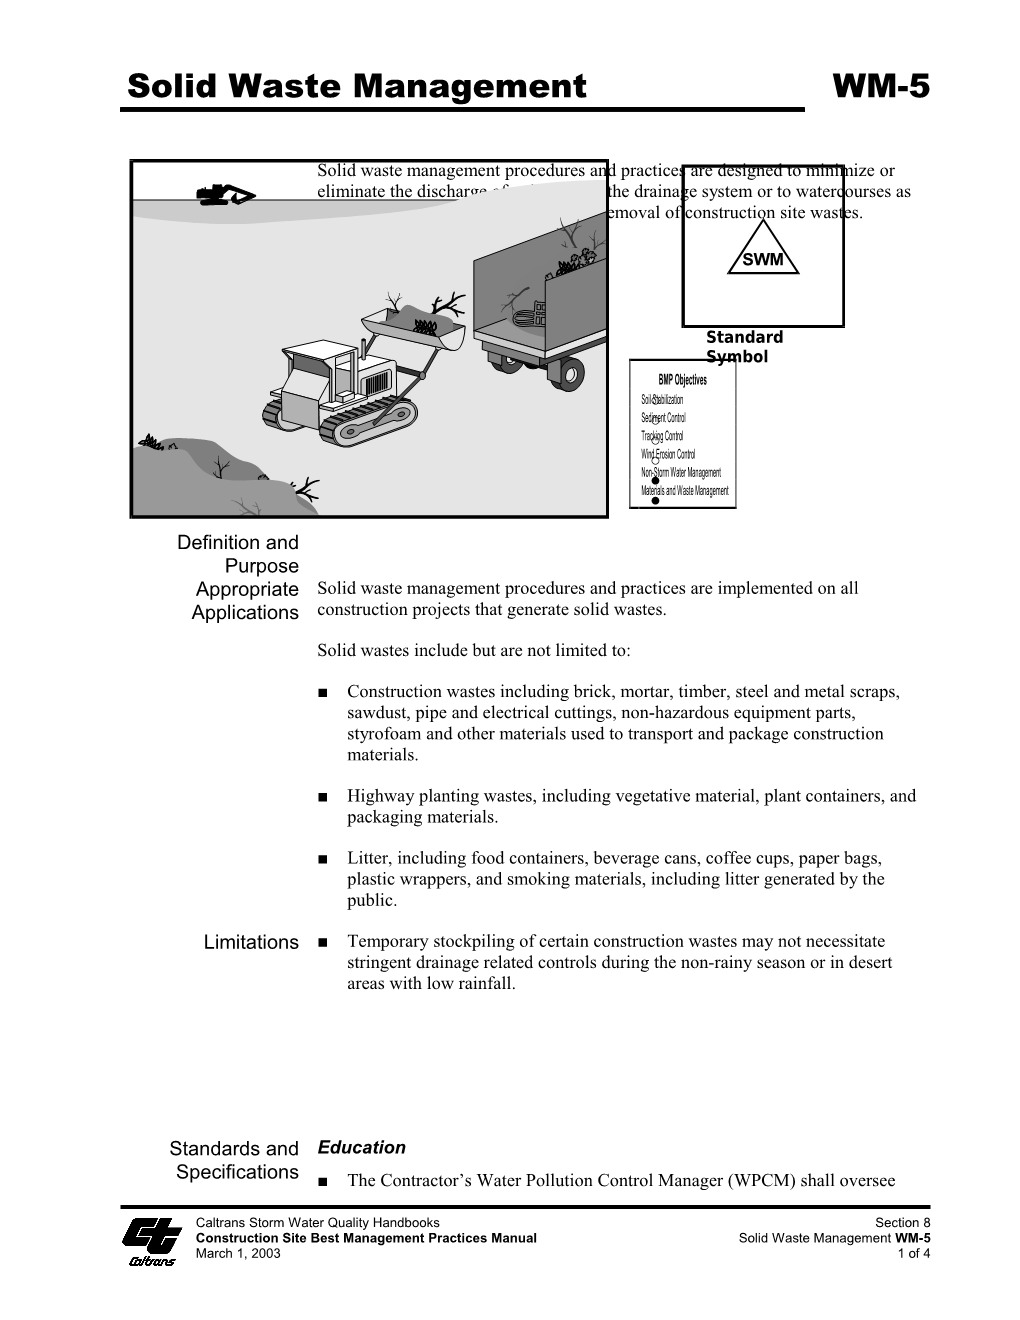 Construction Site Best Management Practices Manualsolid Waste Management WM-5